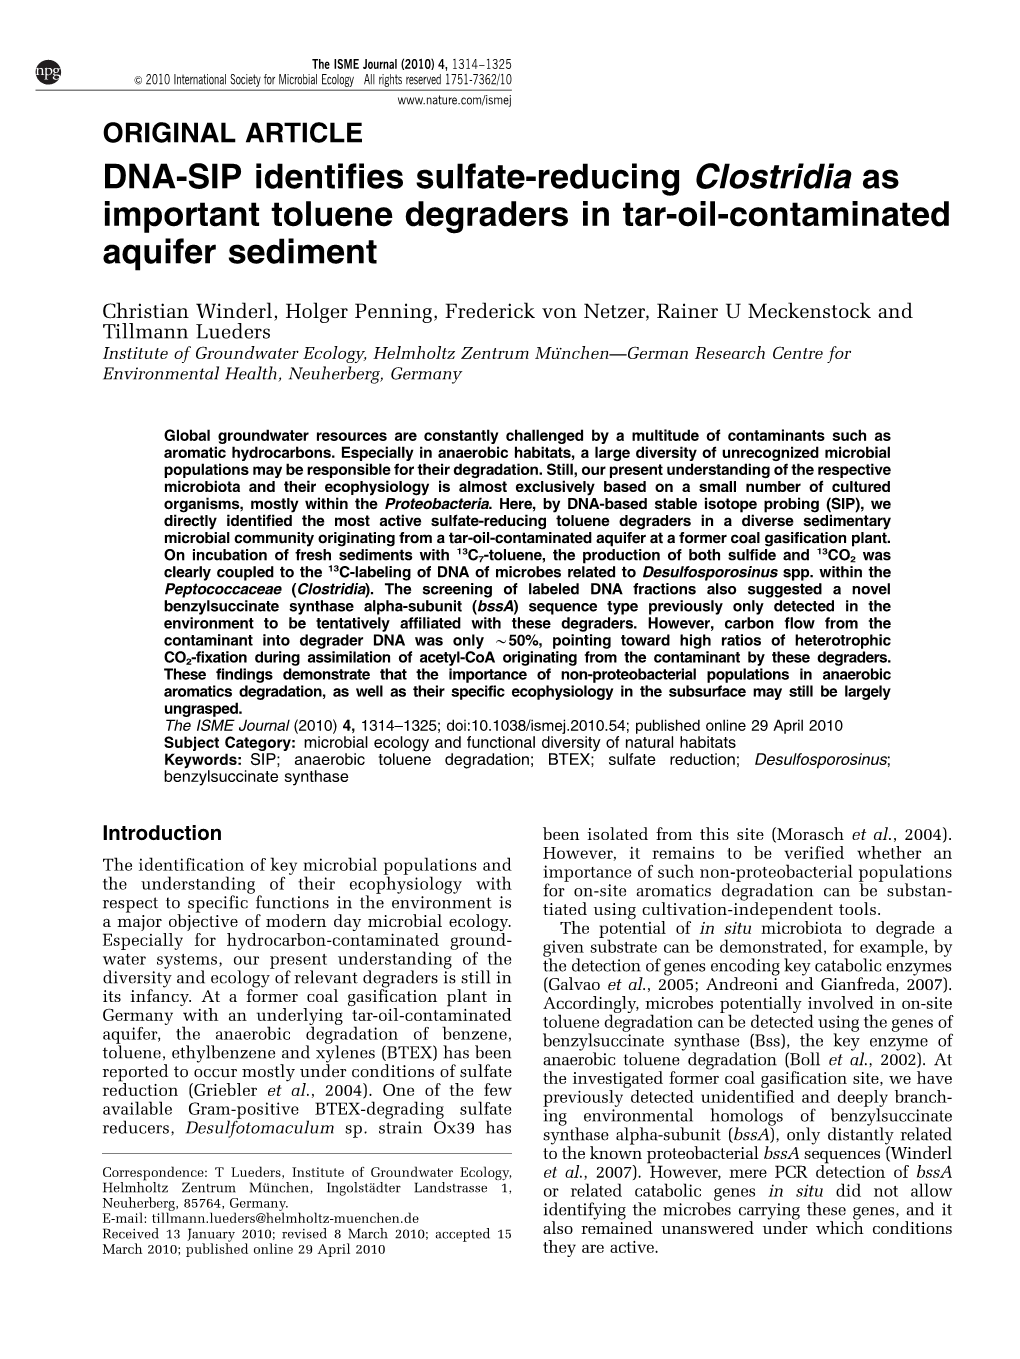 DNA-SIP Identifies Sulfate-Reducing Clostridia As Important Toluene Degraders in Tar-Oil-Contaminated Aquifer Sediment